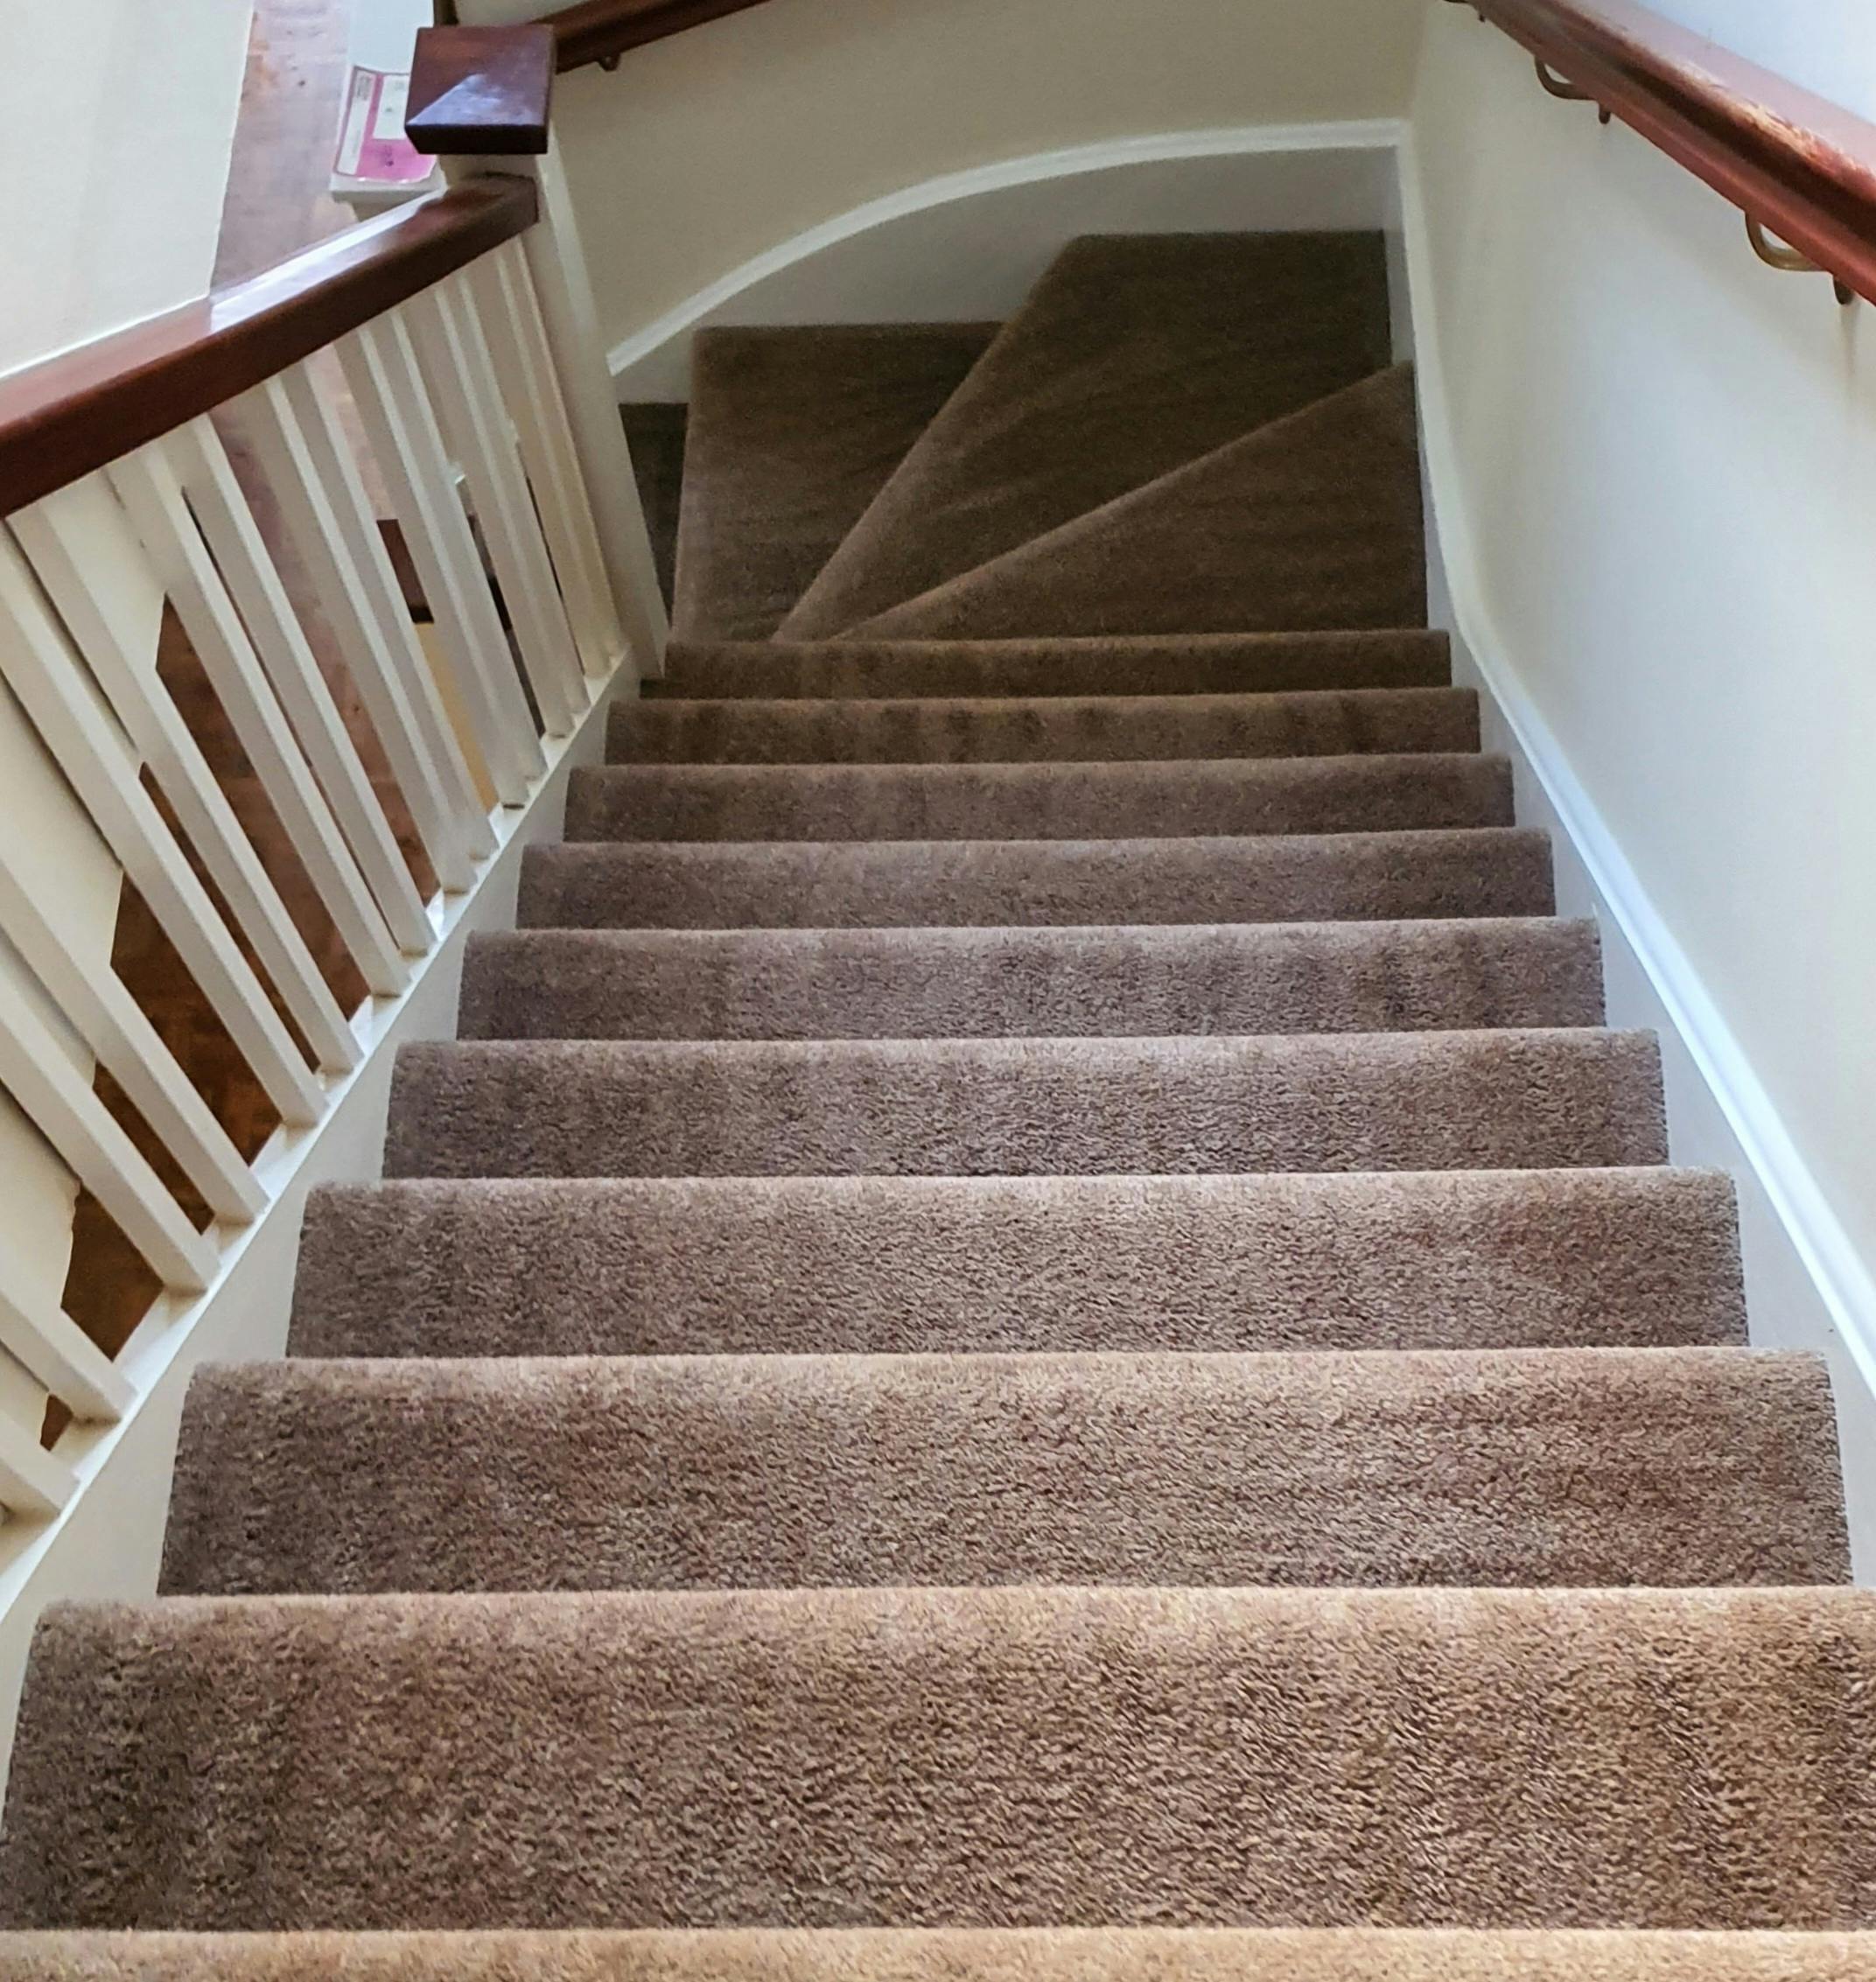 Wool carpet on stairs 